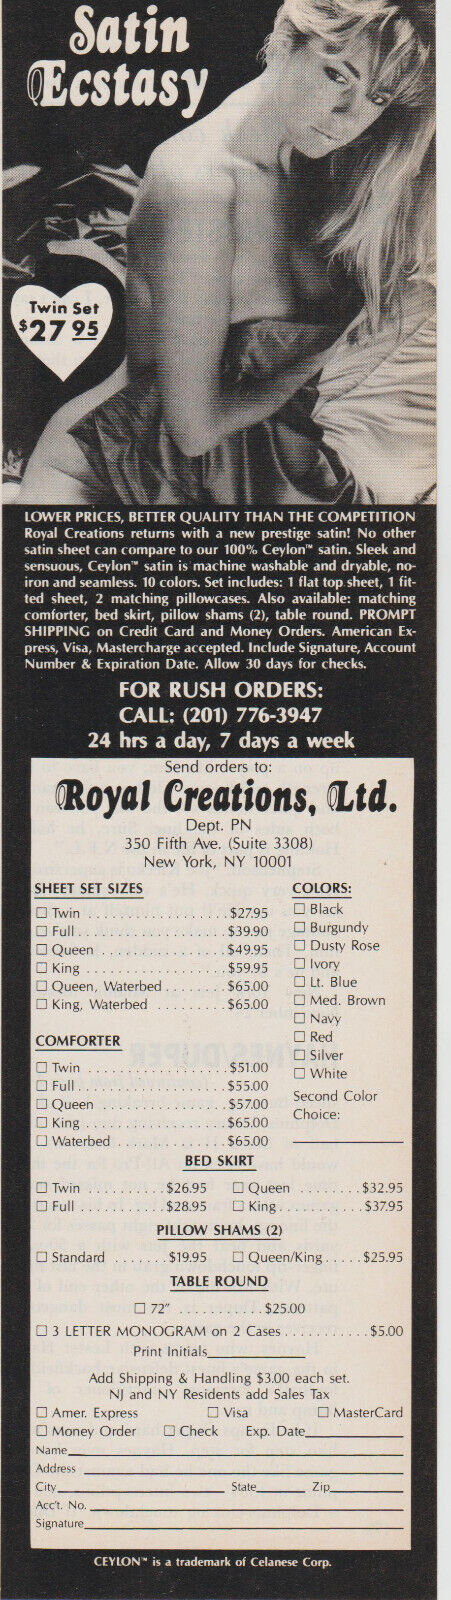 1986 Royal Creations Satin Sheets - Nude Blonde Girl Bed - Order Form Print Ad